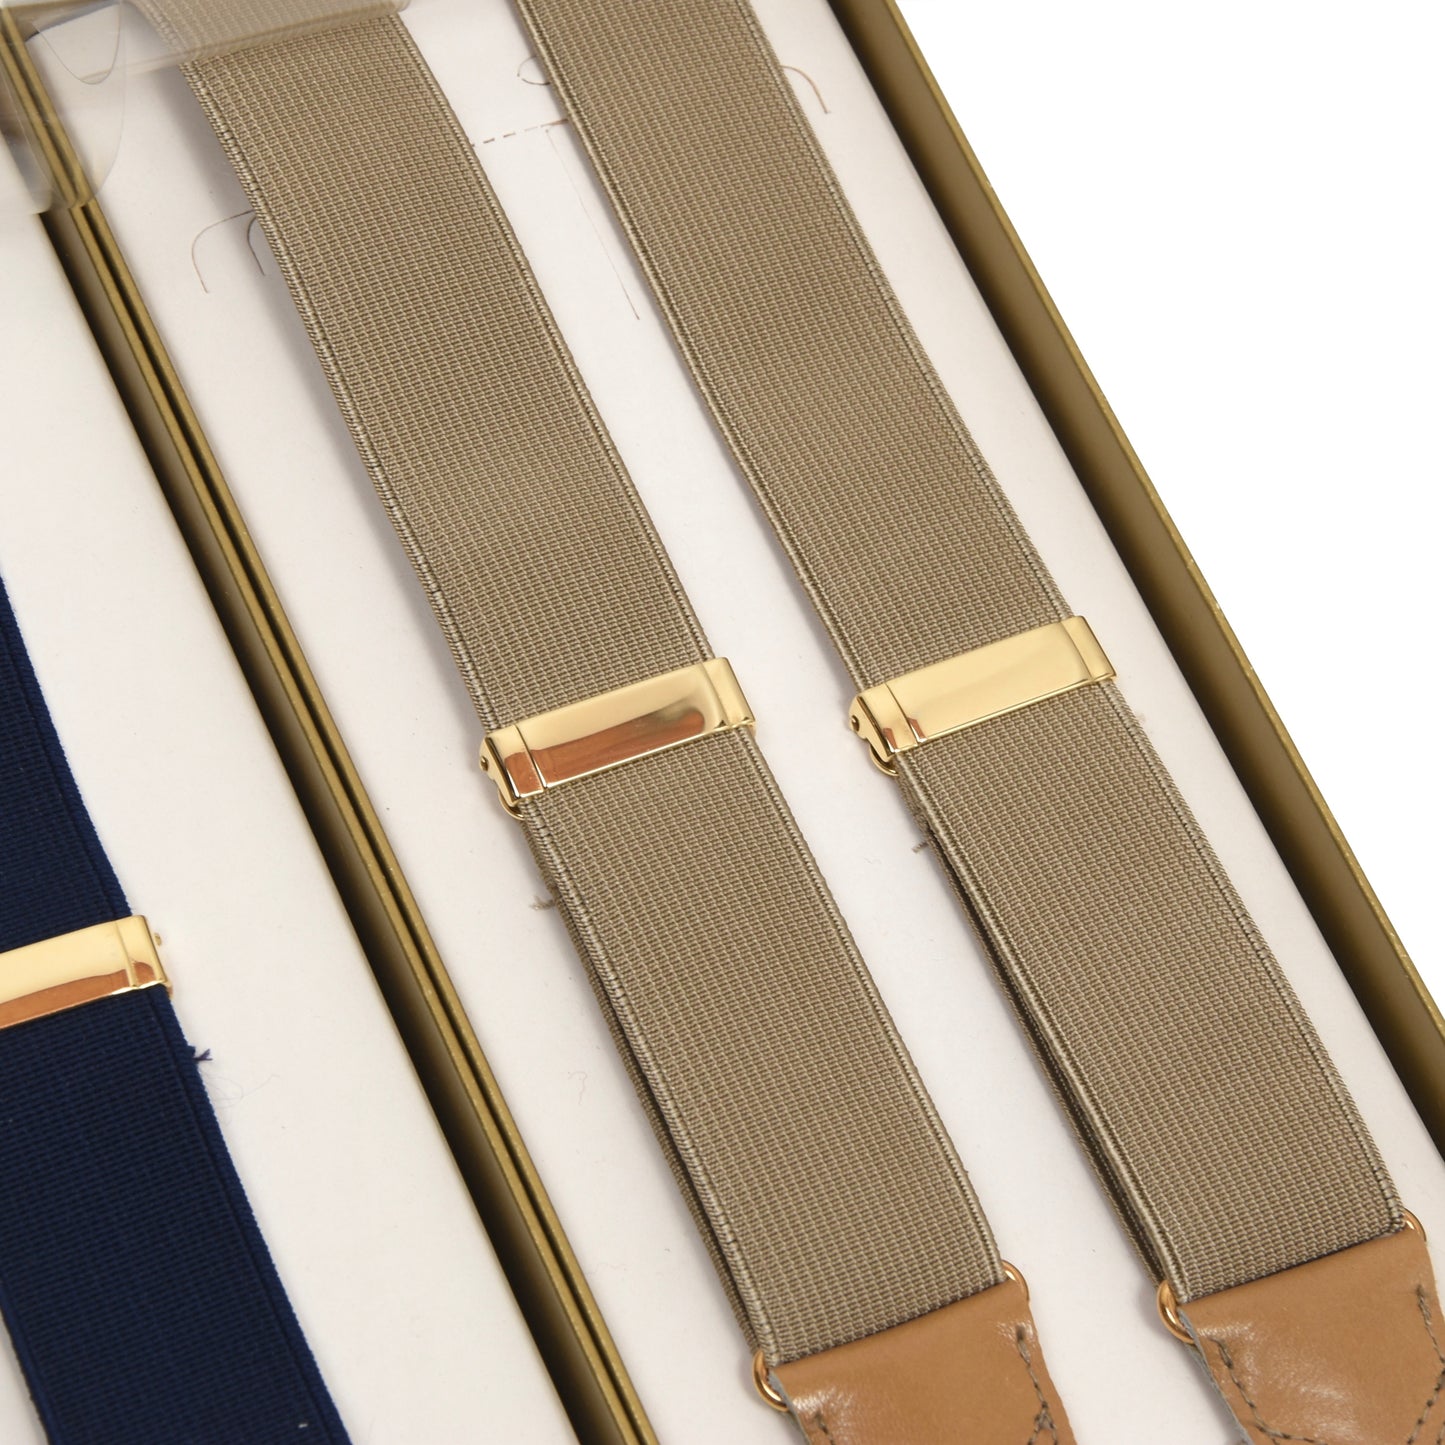 3 Pairs of Vintage L'Aiglon Braces/Suspenders Size 105 & 115 - Beige/Brown/Navy